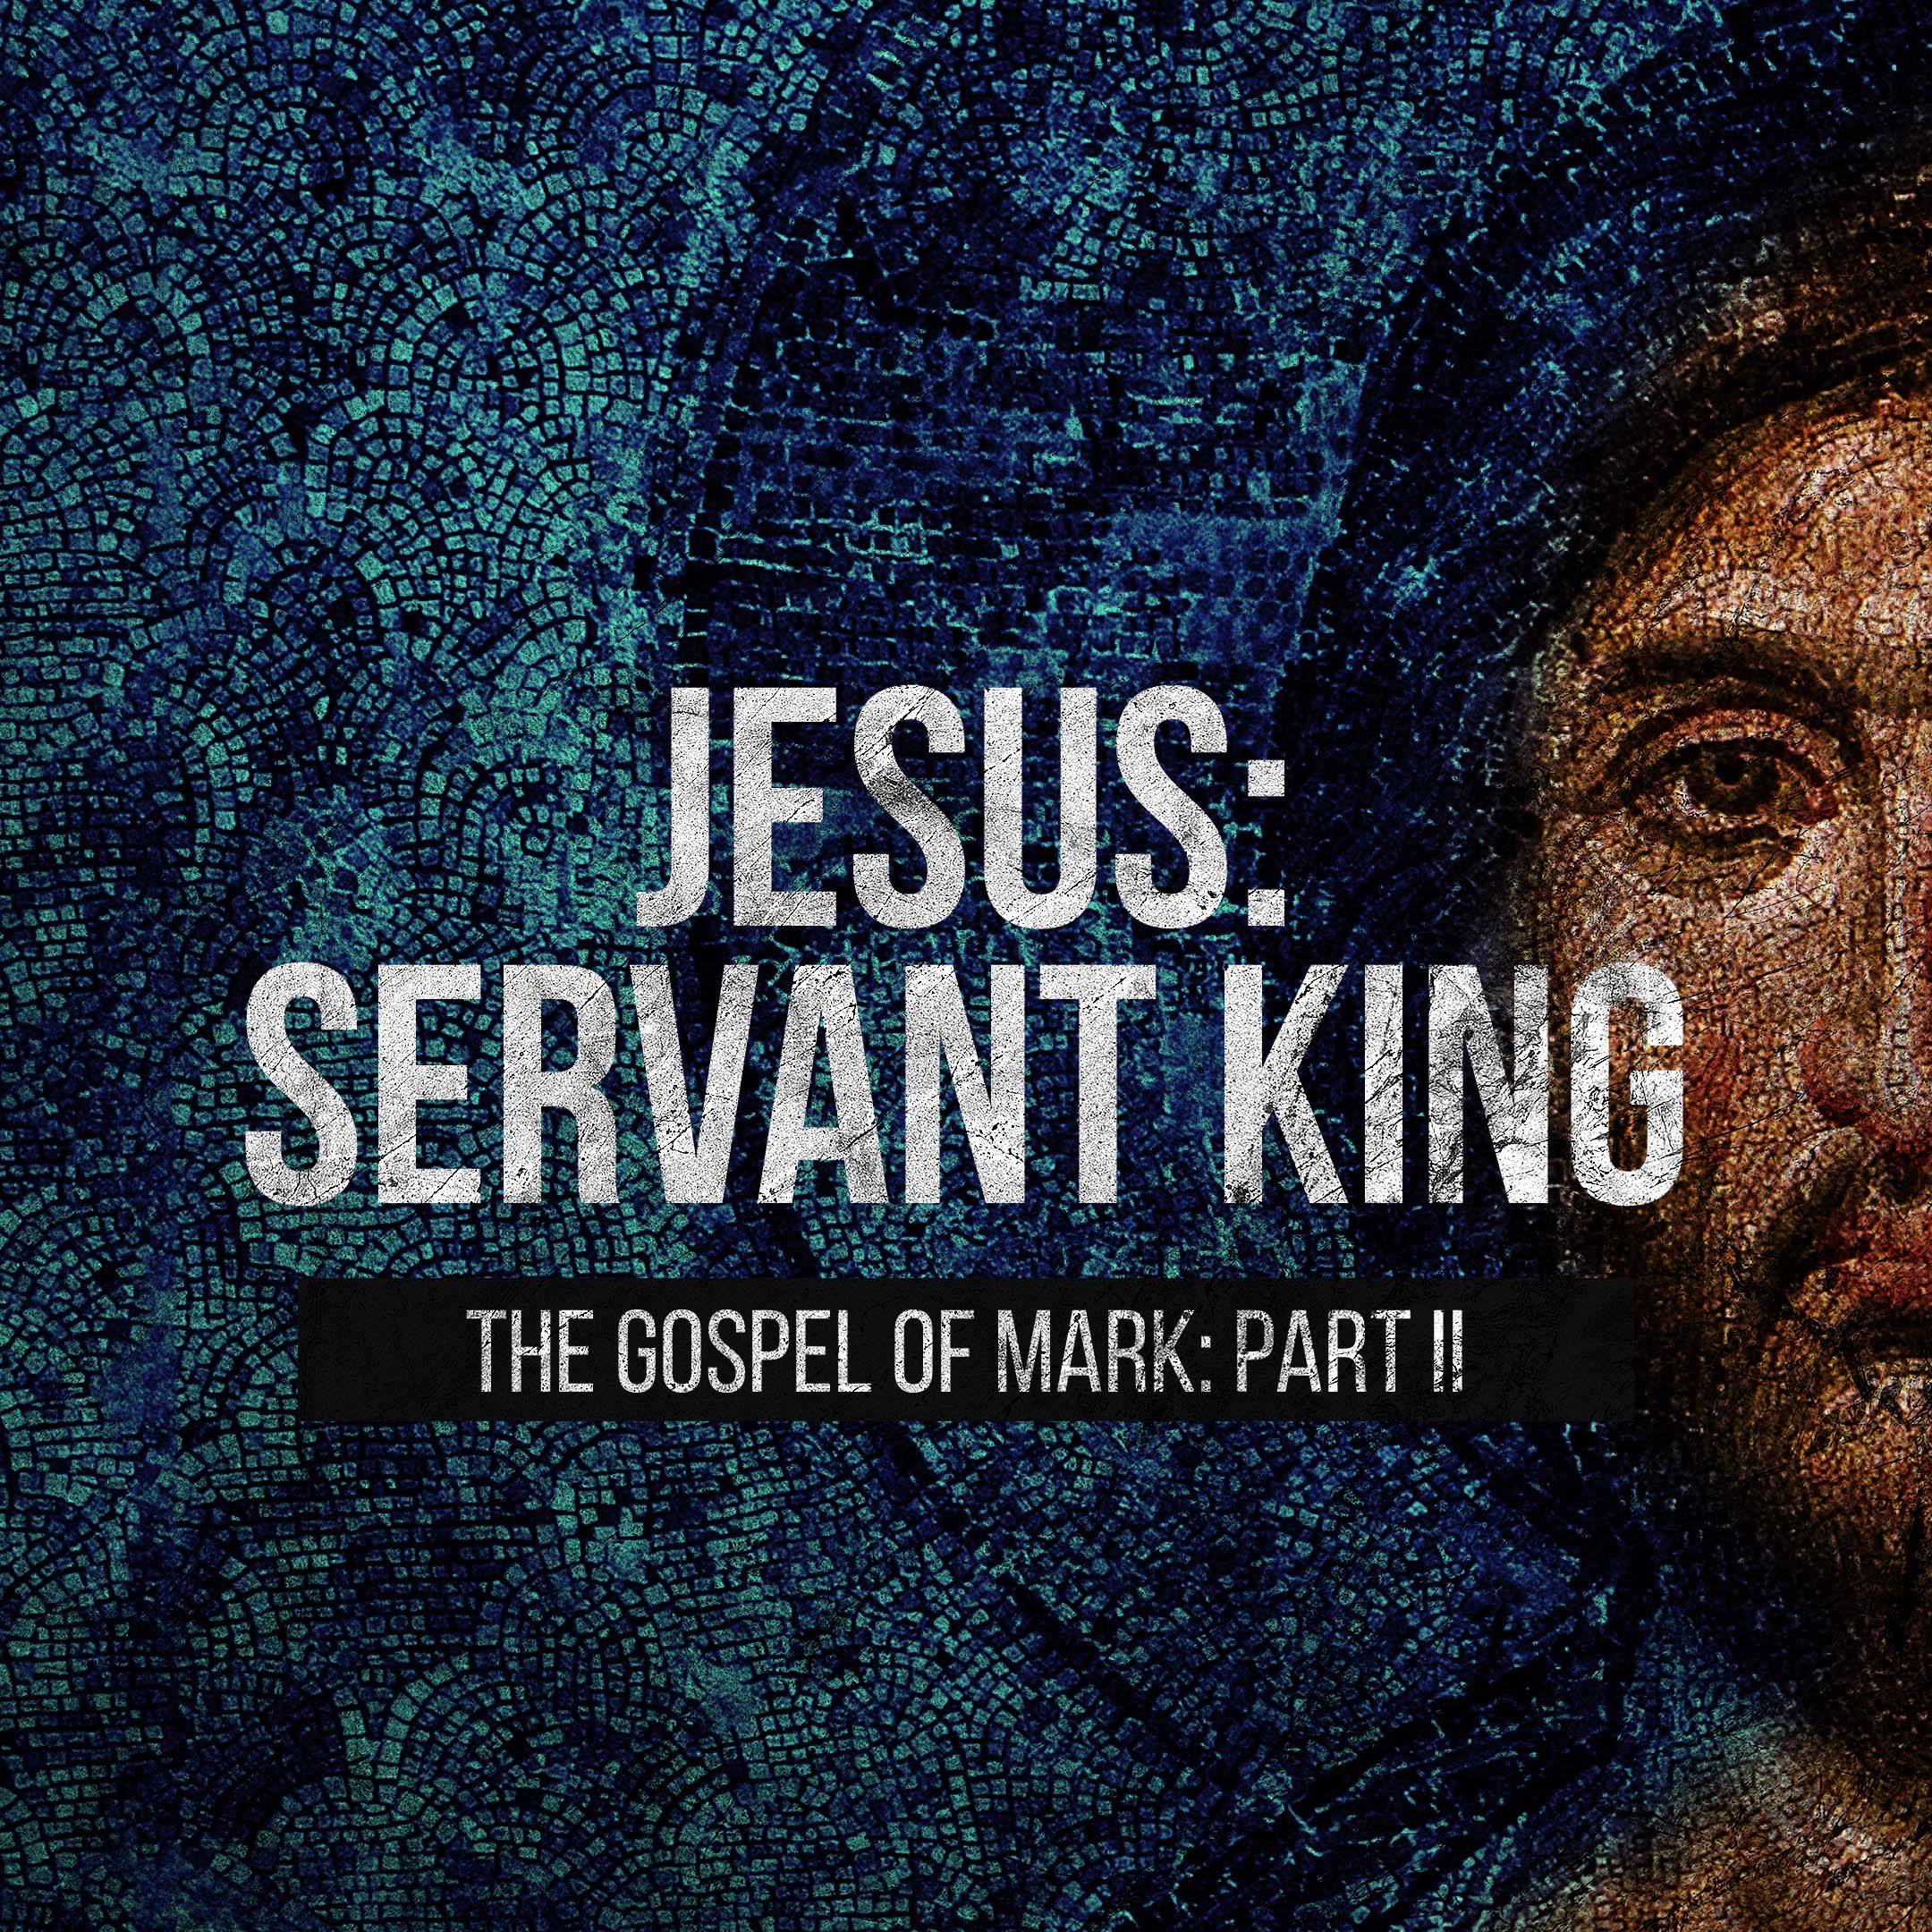 The Book of Mark - Servanthood - Mark 10:35-45